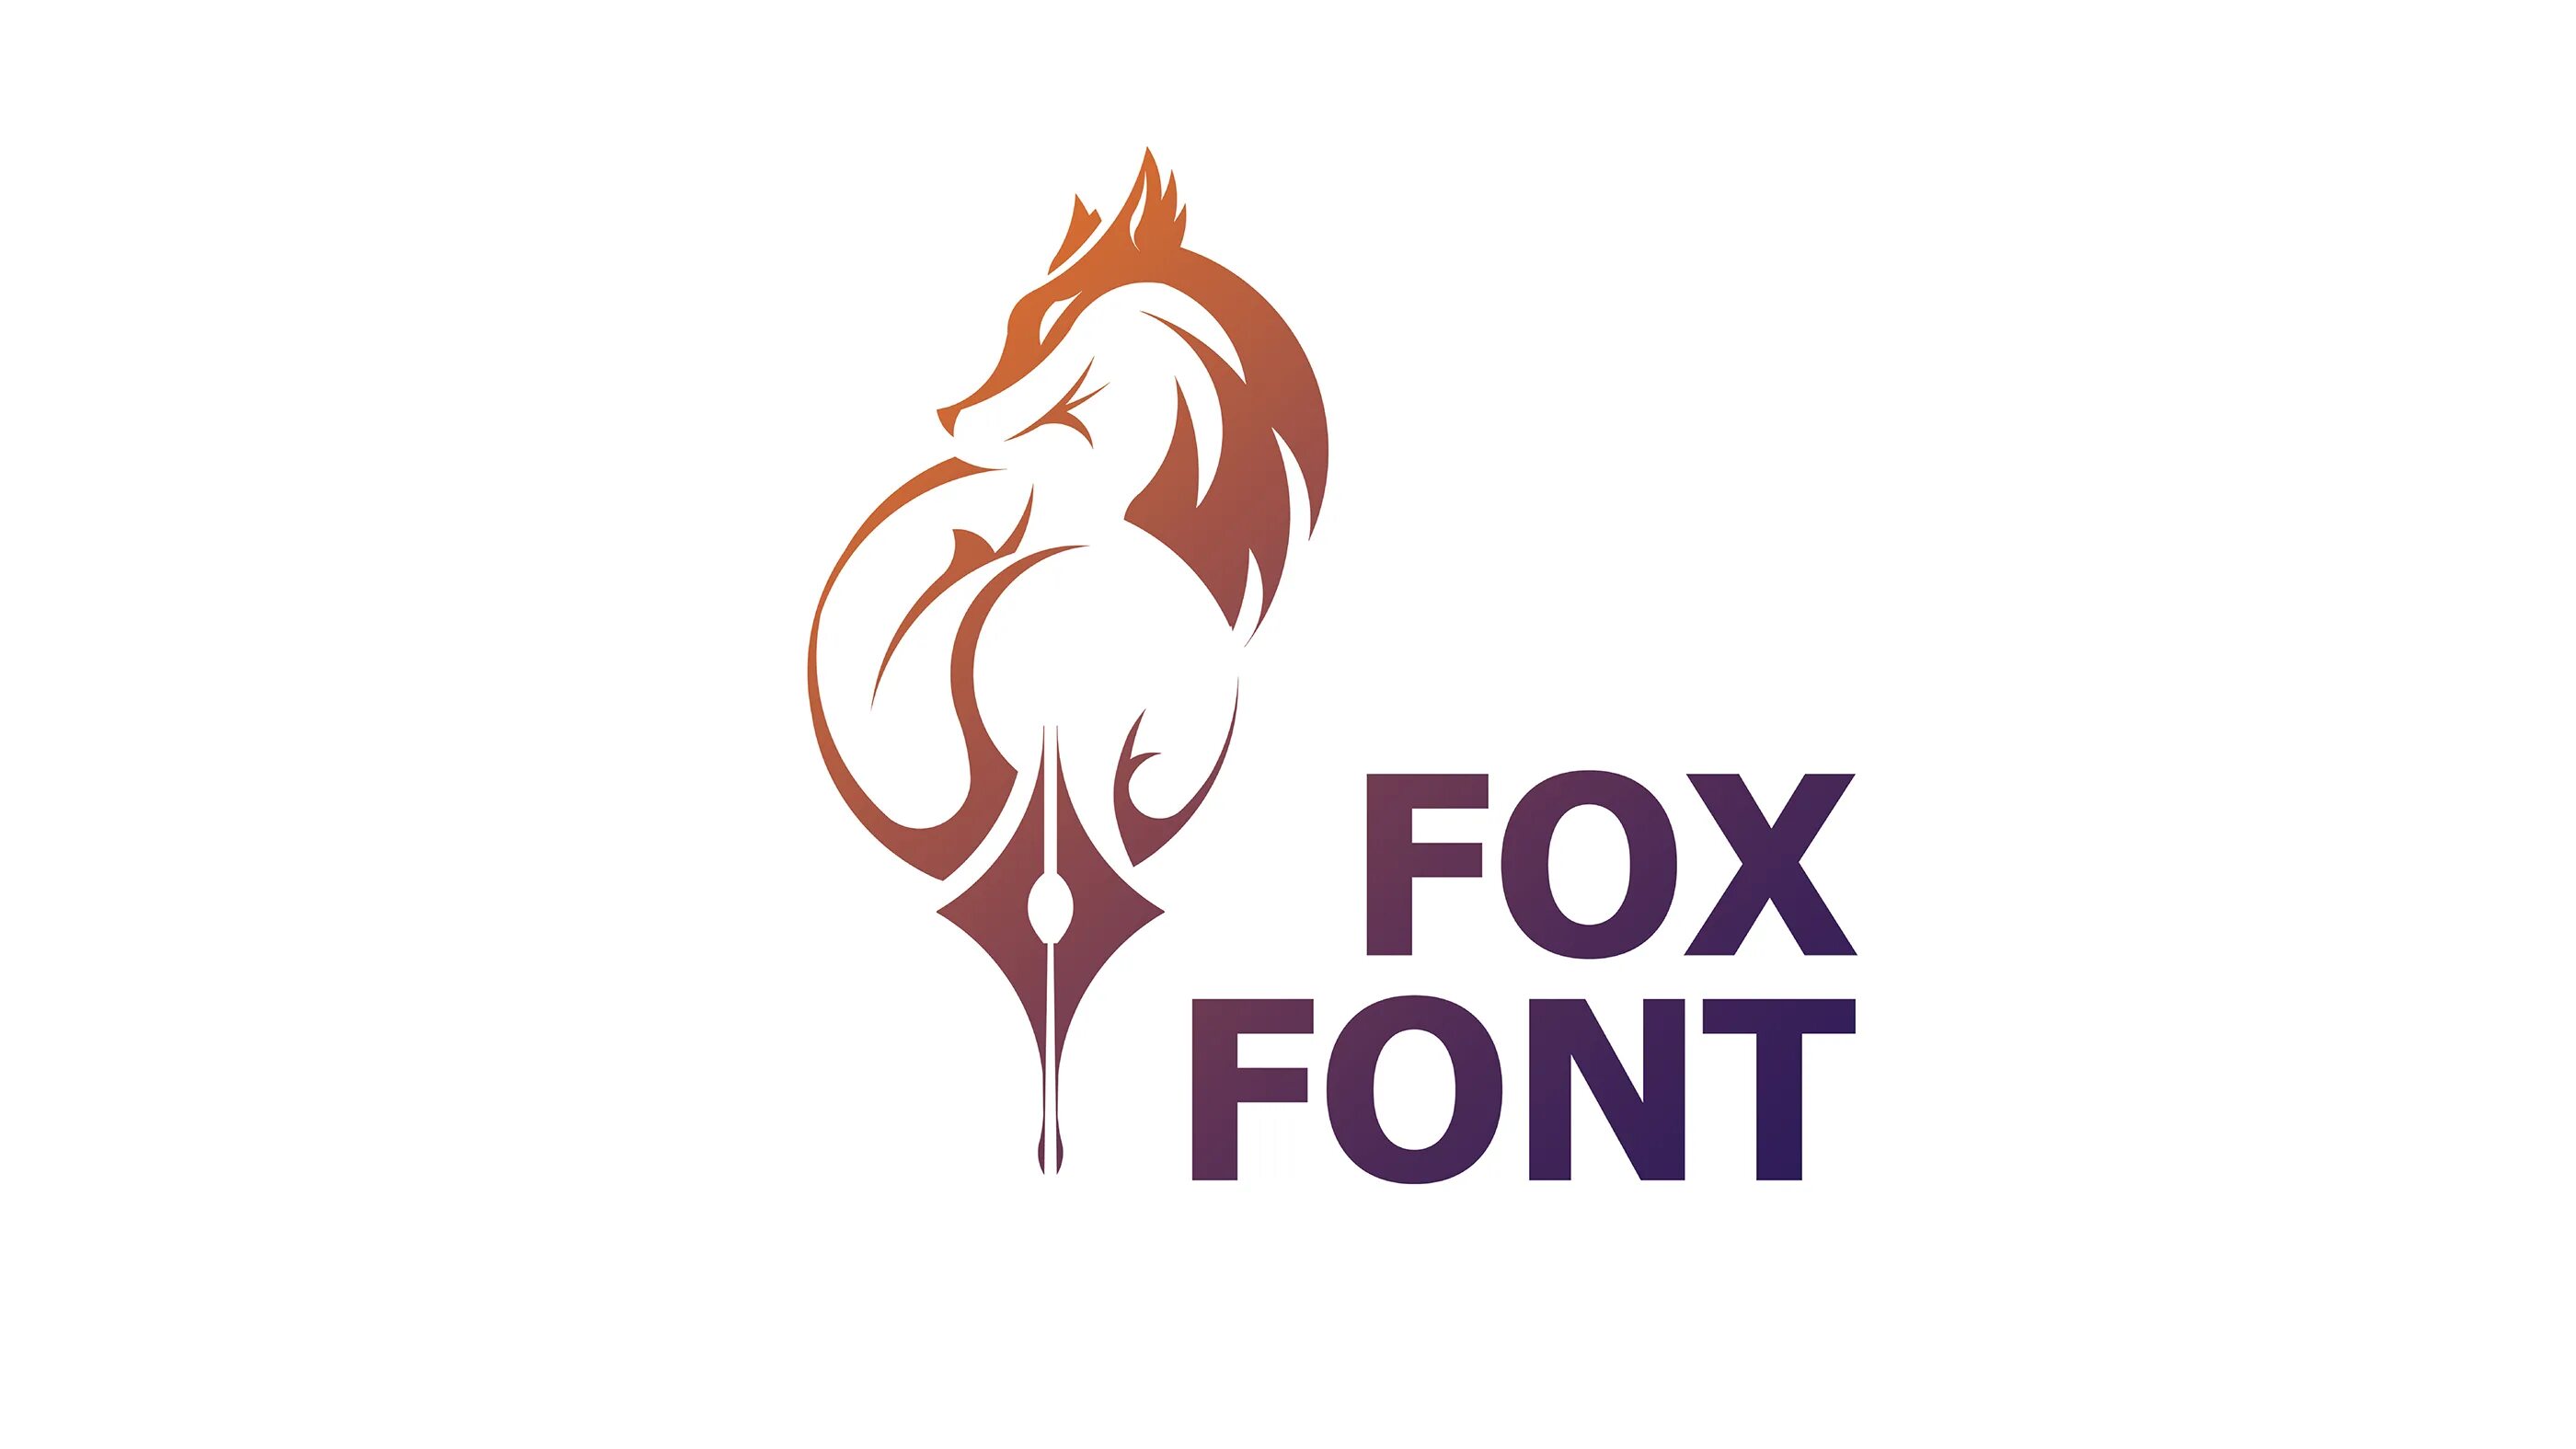 Fox шрифт. Шрифт лиса. Шрифт для логотипа лиса. Надпись шрифтом лиса. Fox font